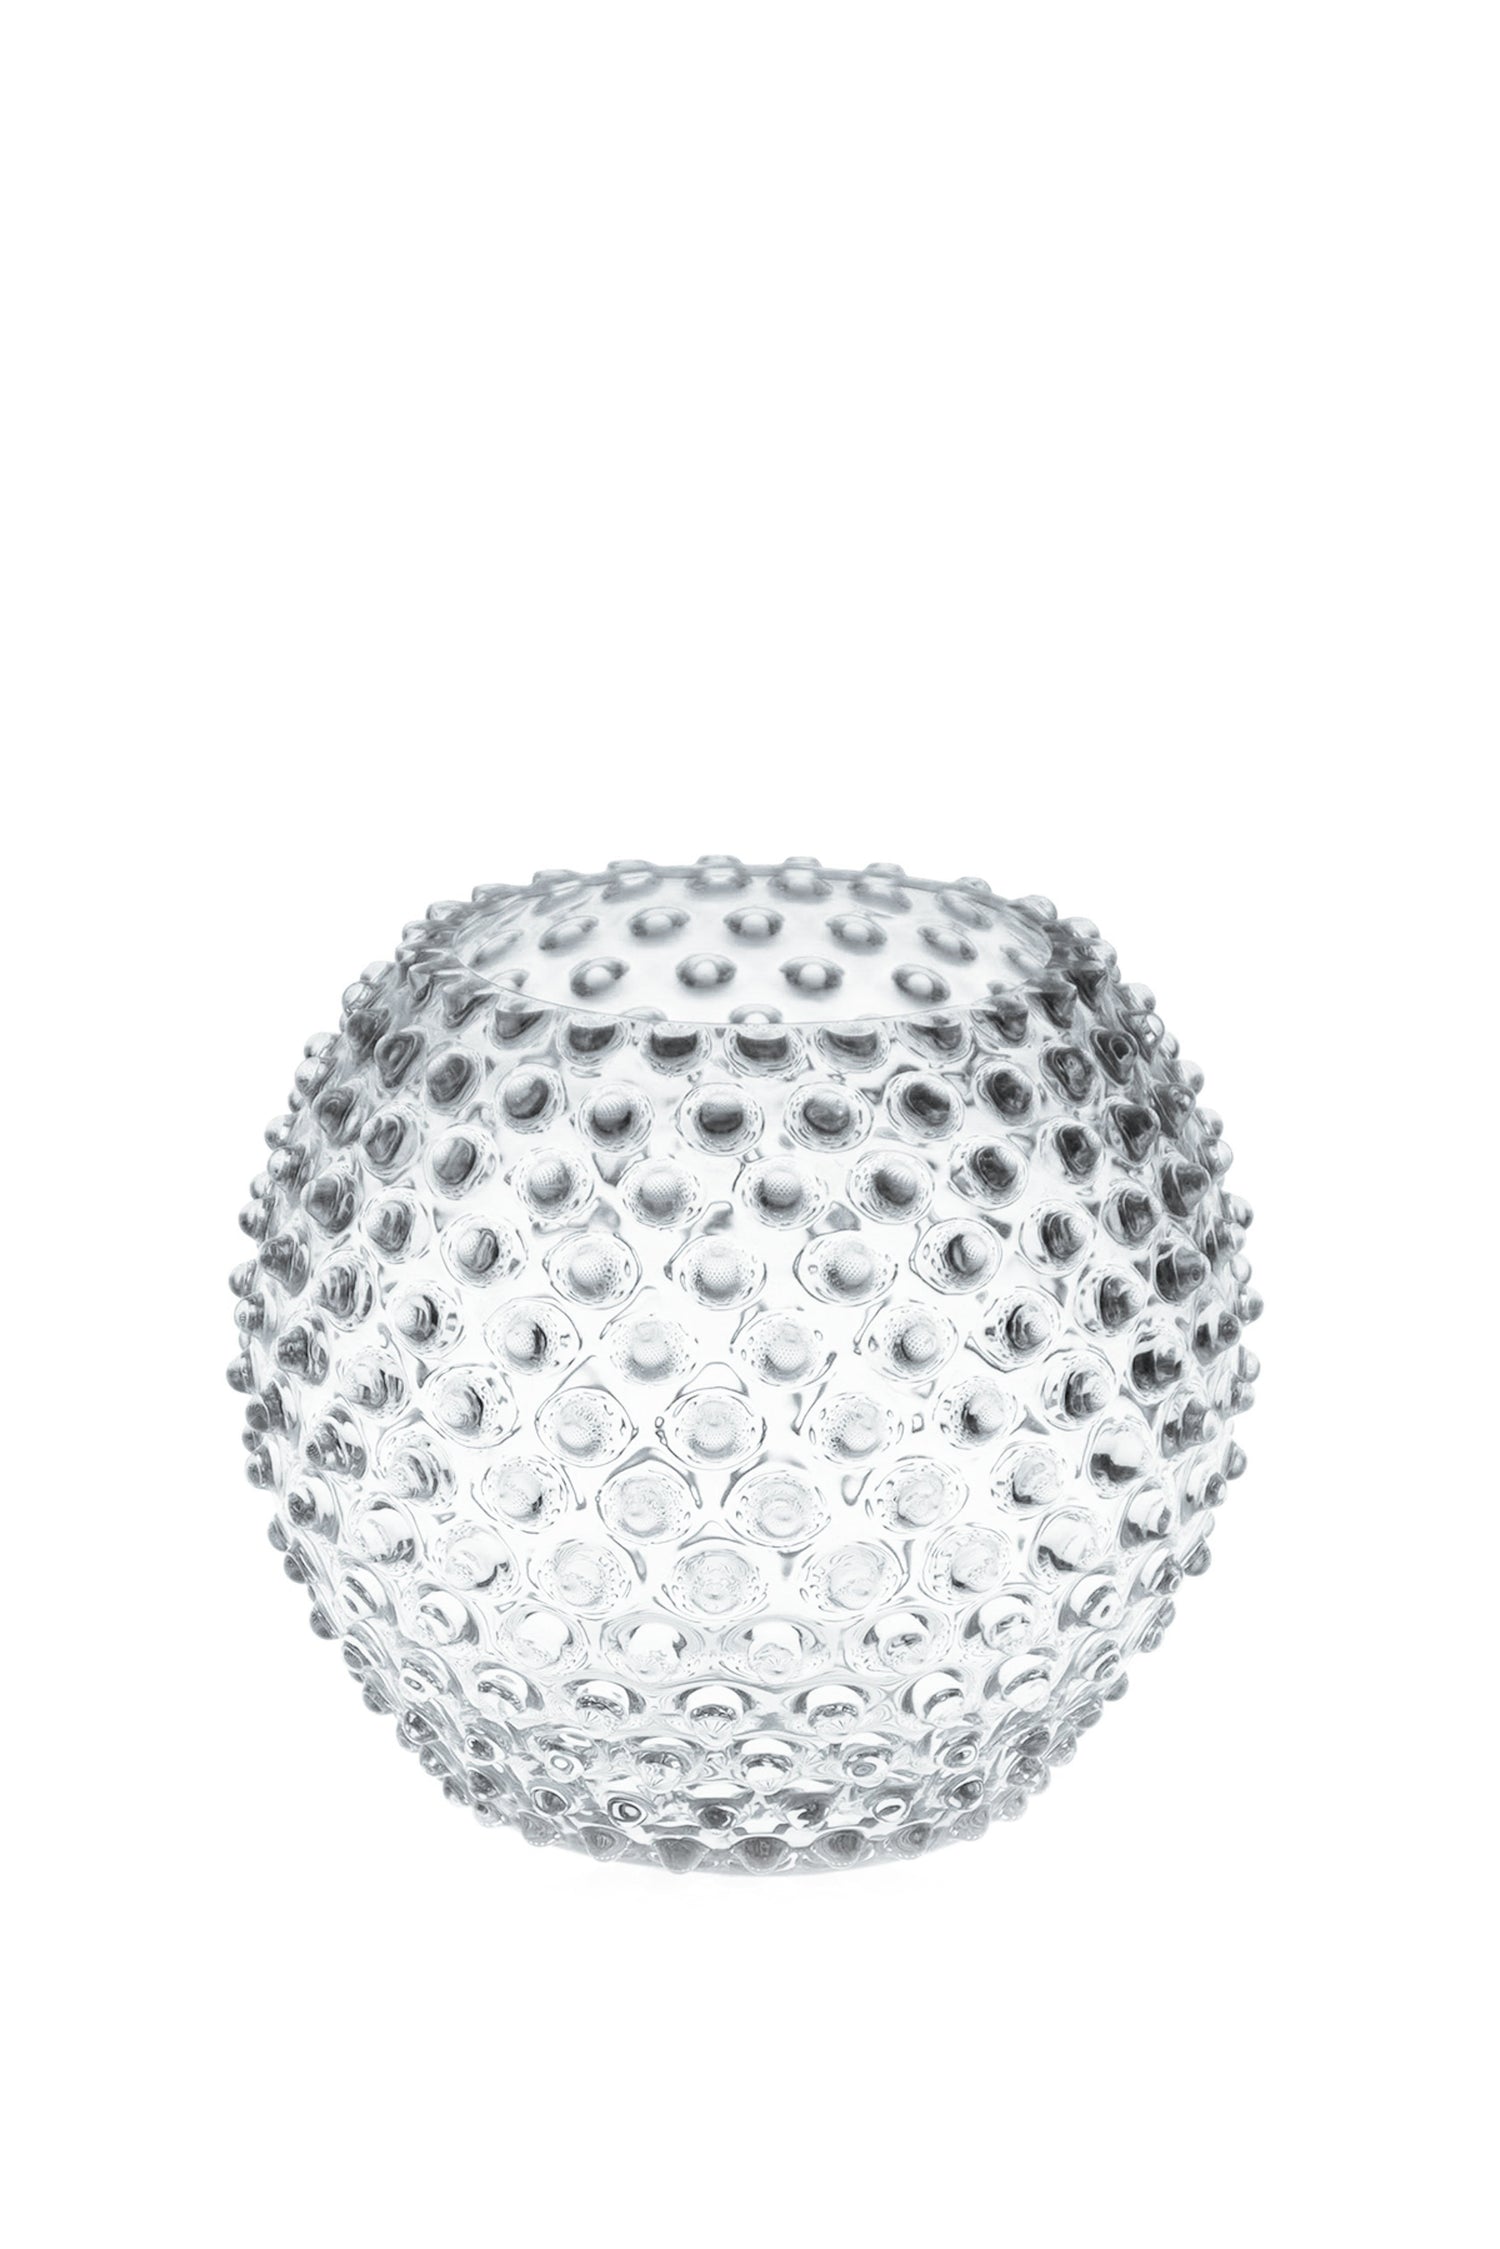 Clear crystal Hobnail Globe vase, small